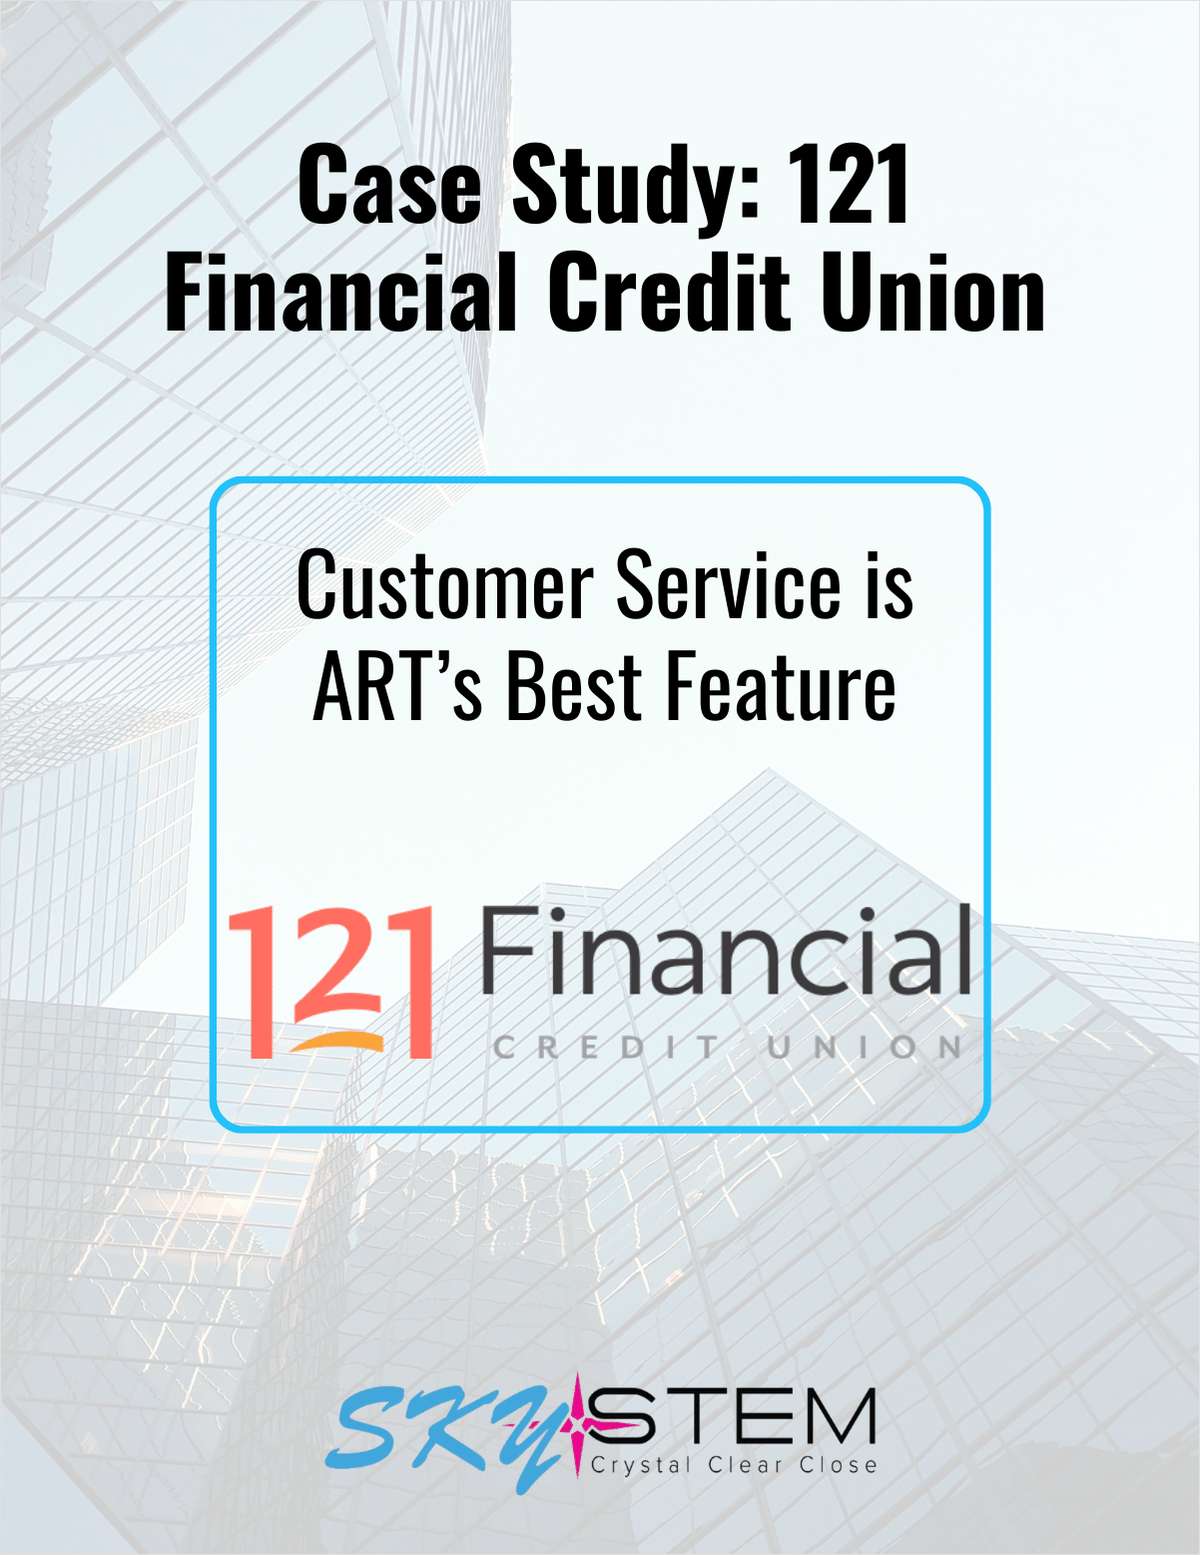 Case Study: 121 Financial Credit Union